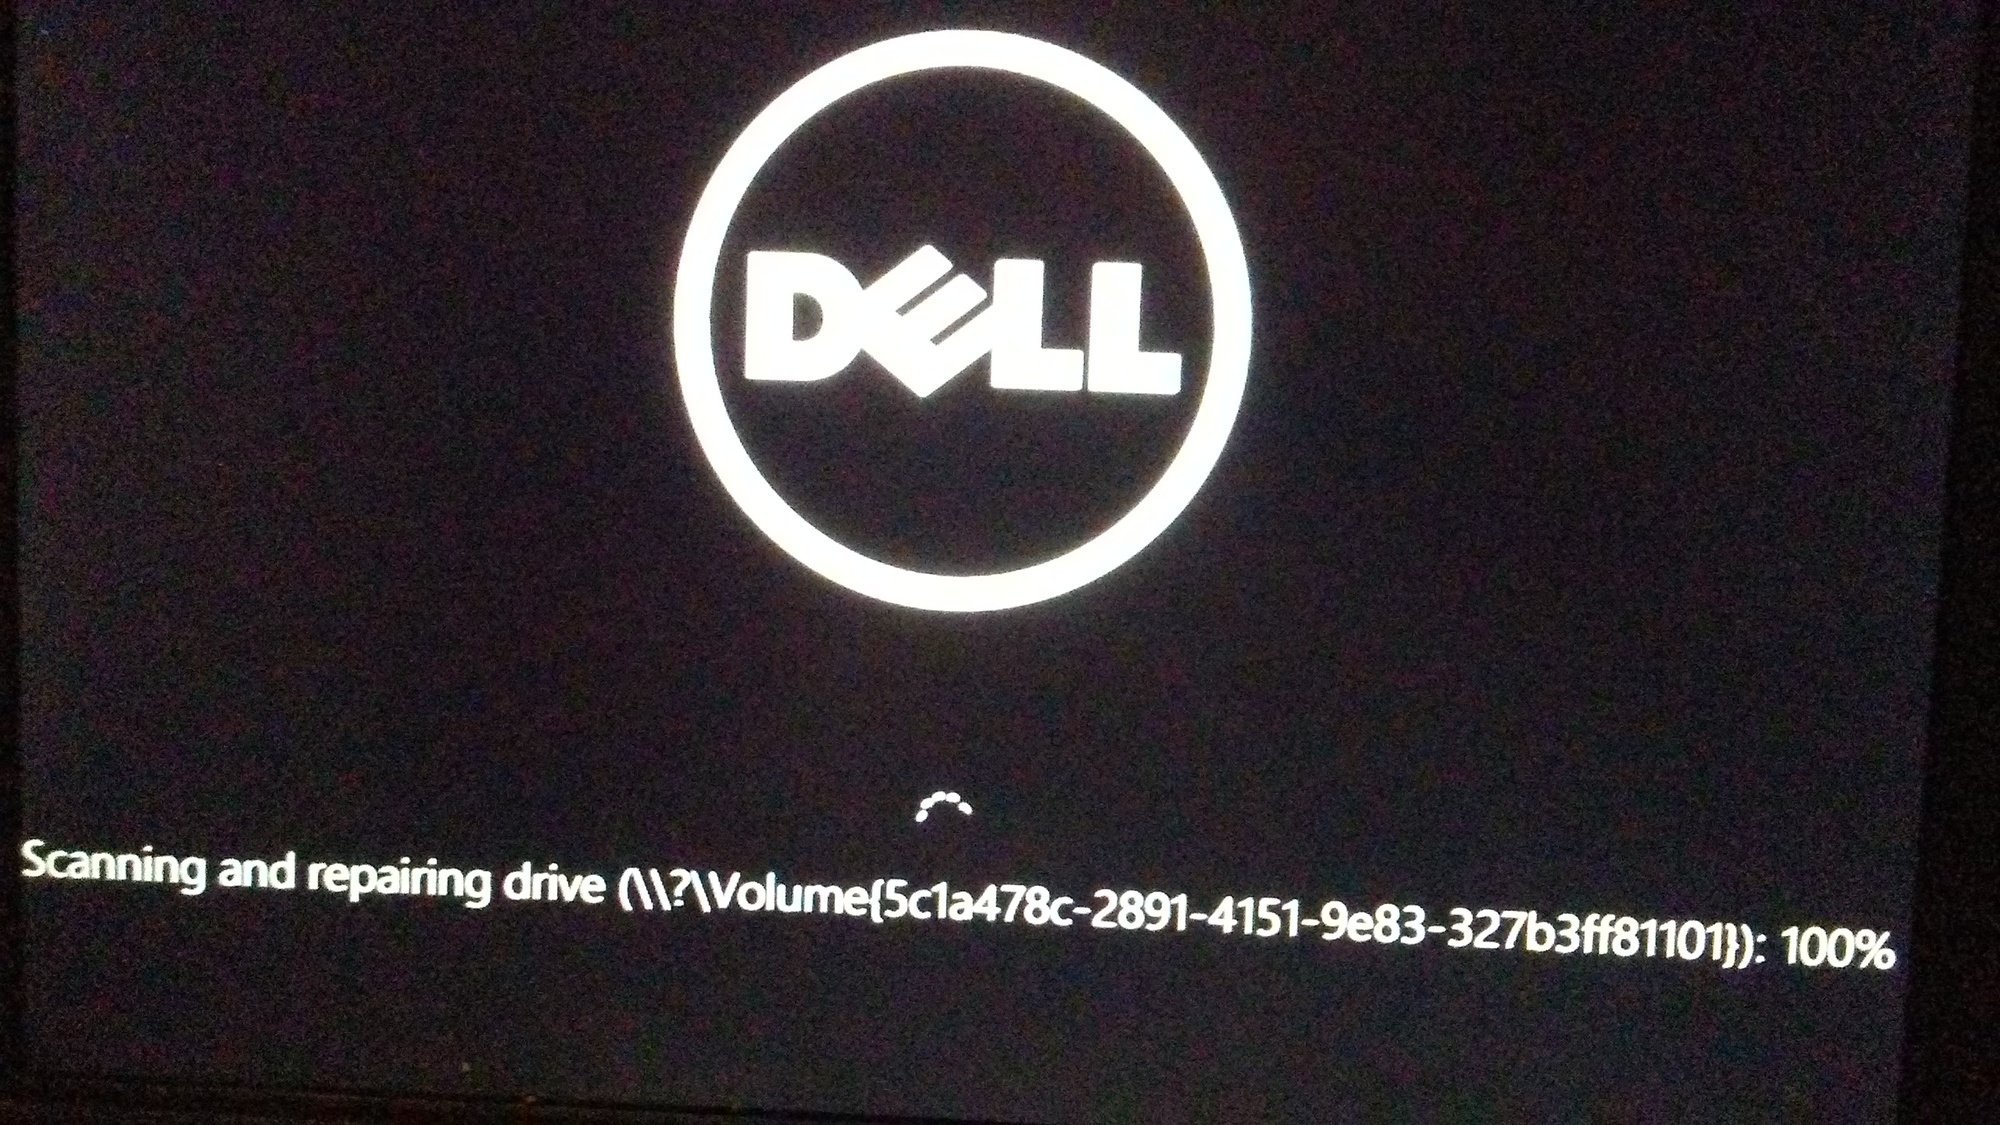 Windows 10 Computer Crashed daa8b6b1-6c26-4cf3-9d42-41e148fa0f8f?upload=true.jpg